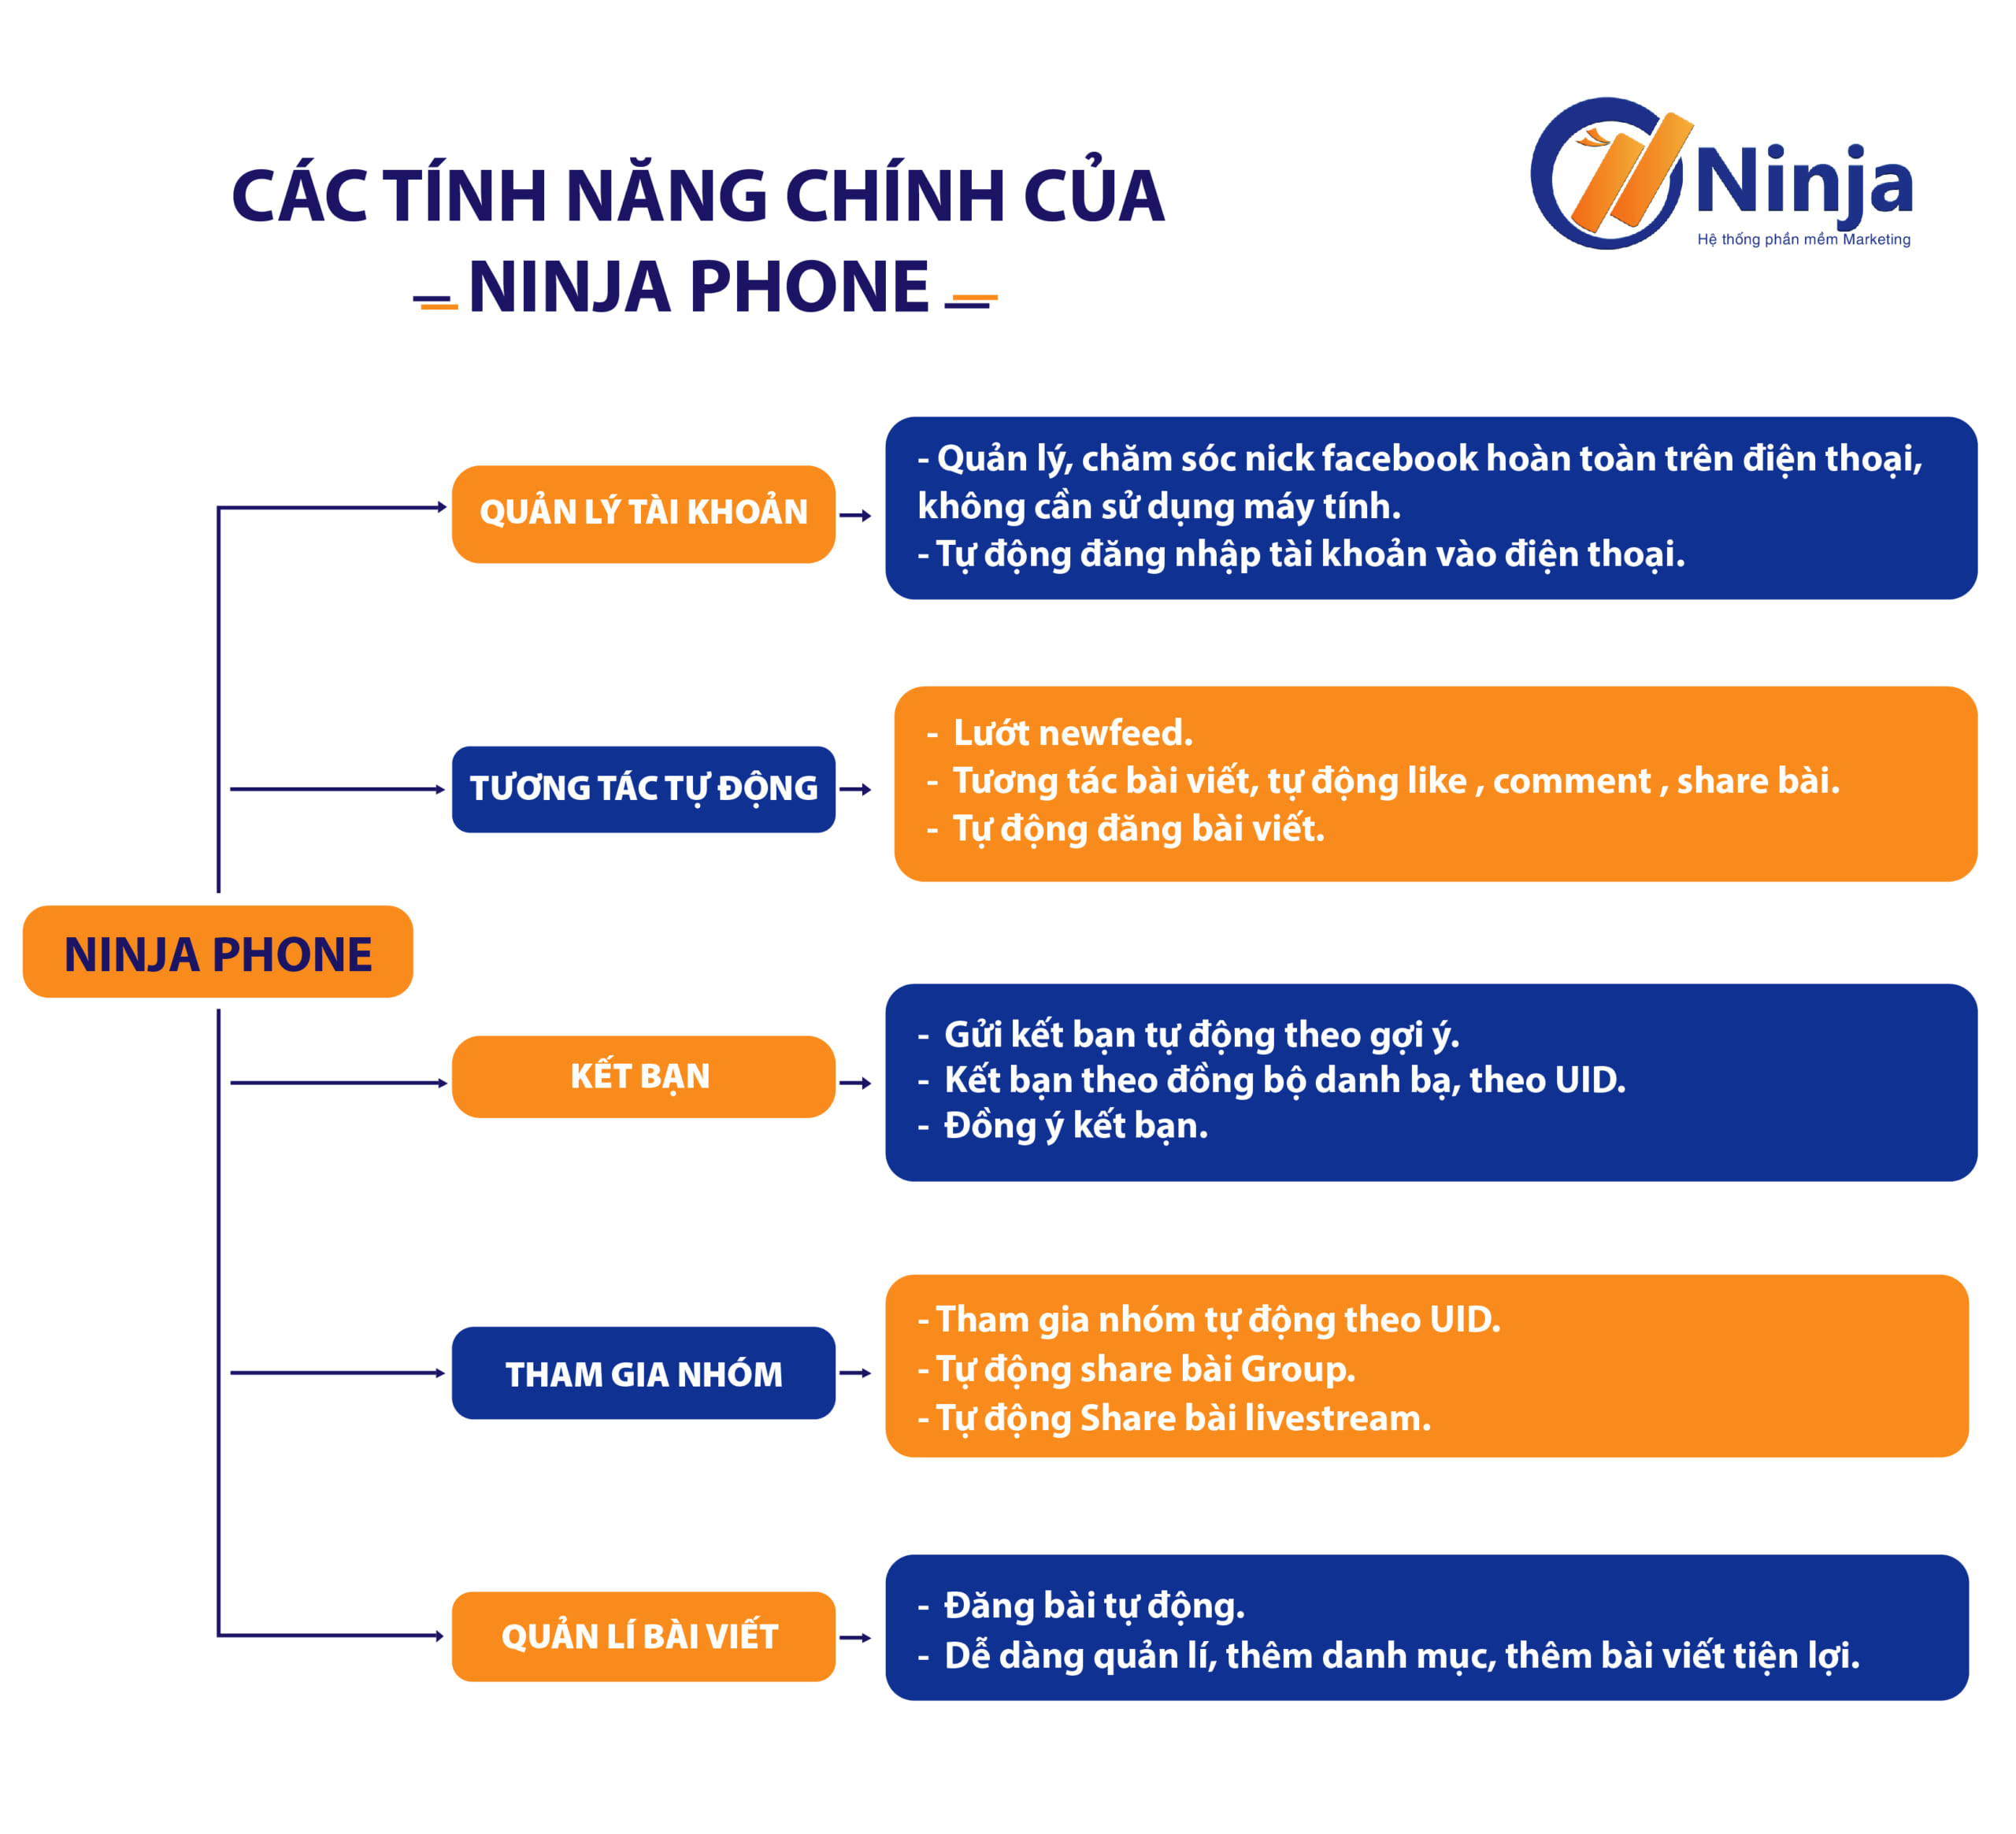 ninja-phone-phan-mem-nuoi-nick-dien-thoai-tu-dong-tien-ich